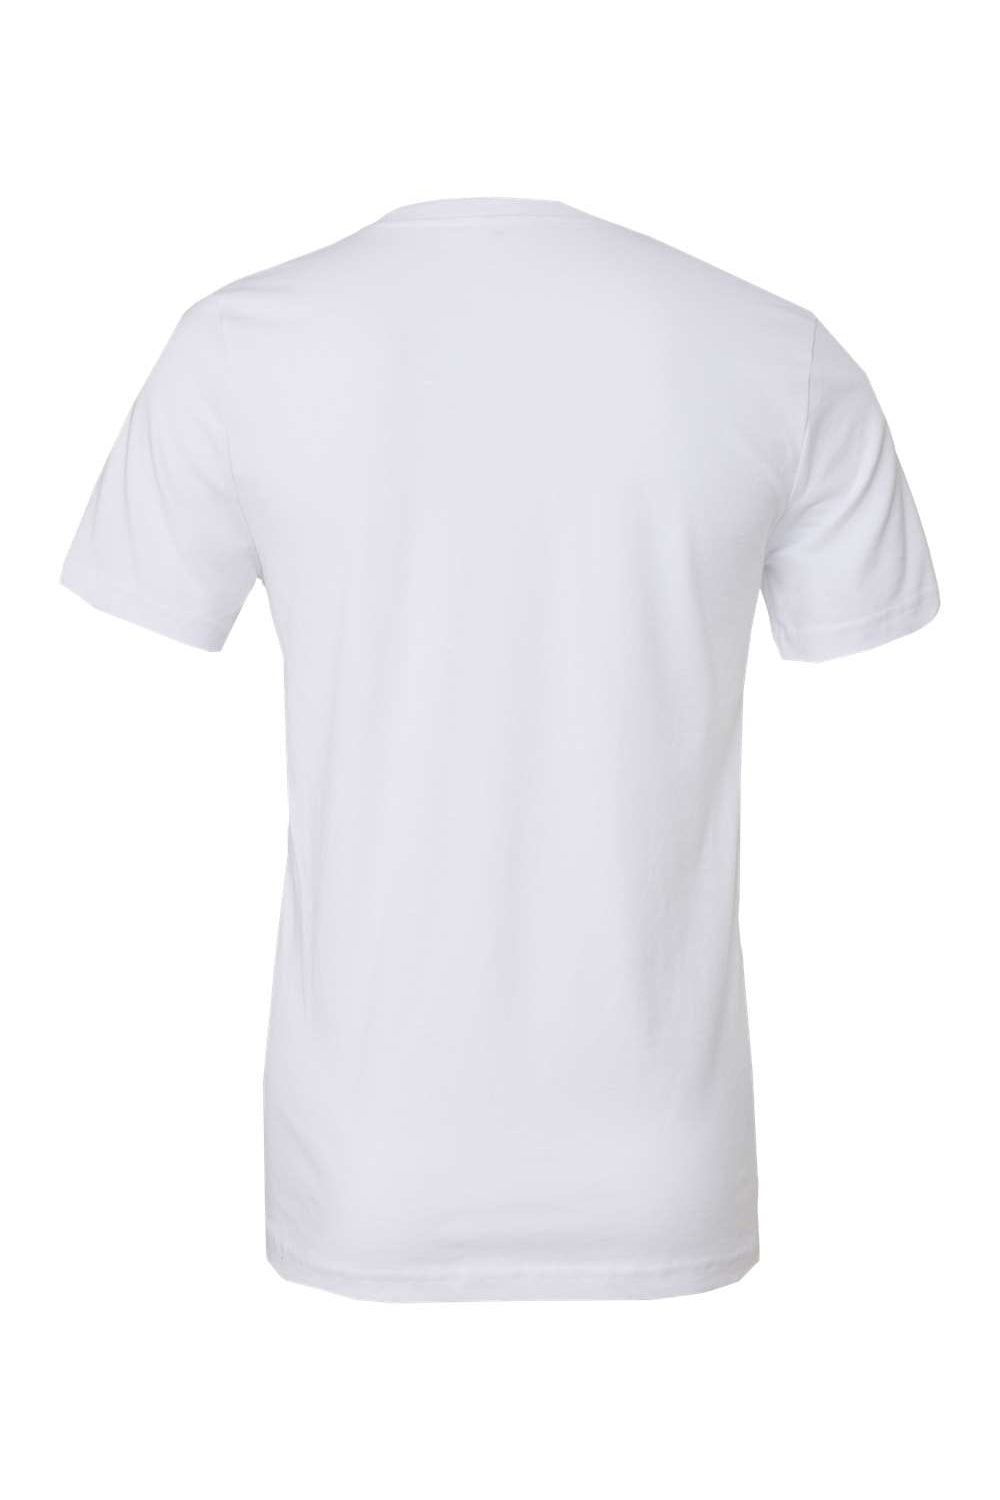 Bella + Canvas BC3001/3001C Mens Jersey Short Sleeve Crewneck T-Shirt White Flat Back